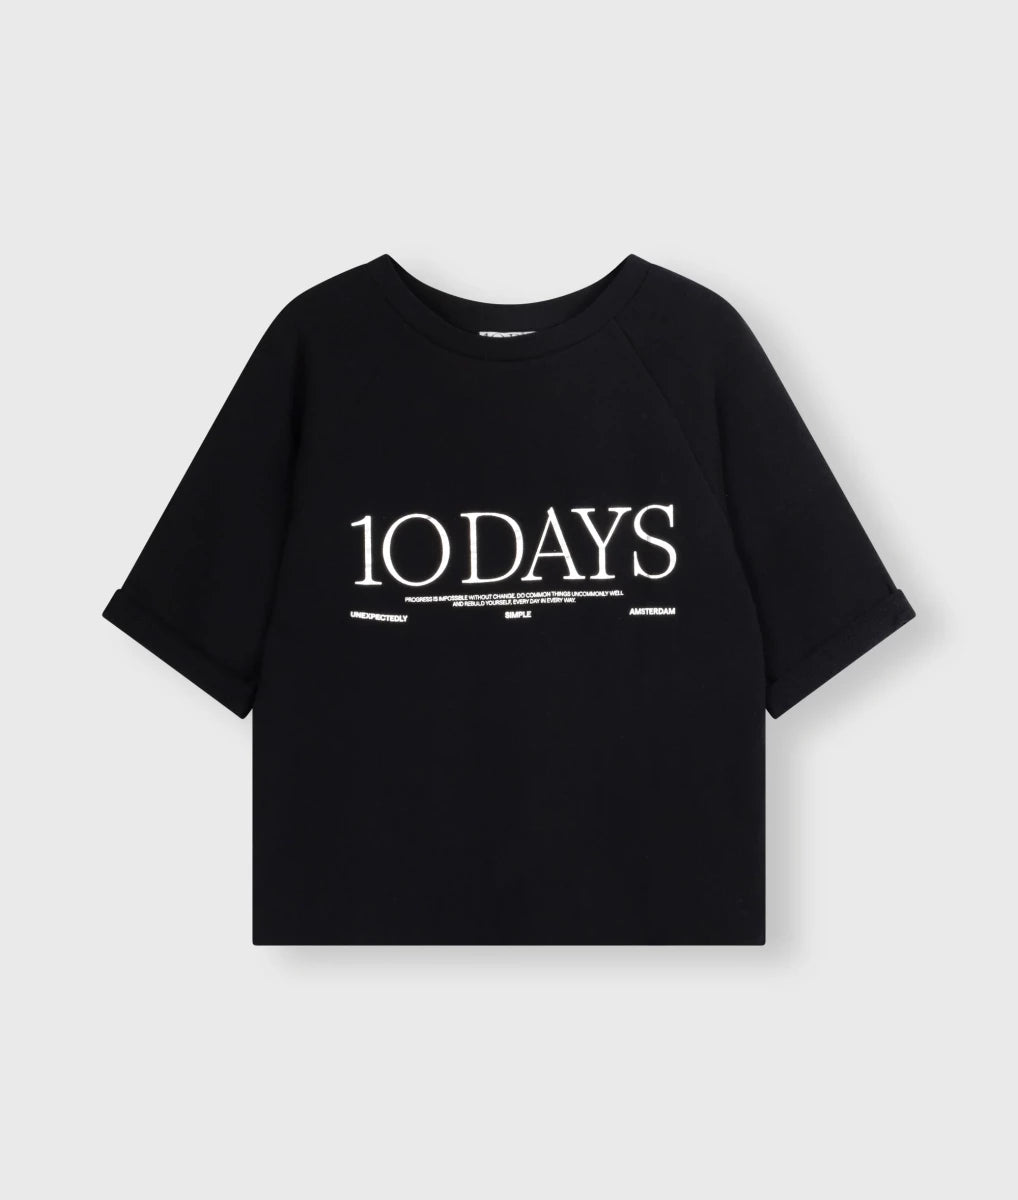 10 DAYS 10 DAYS sweater 20-806-4202 1012